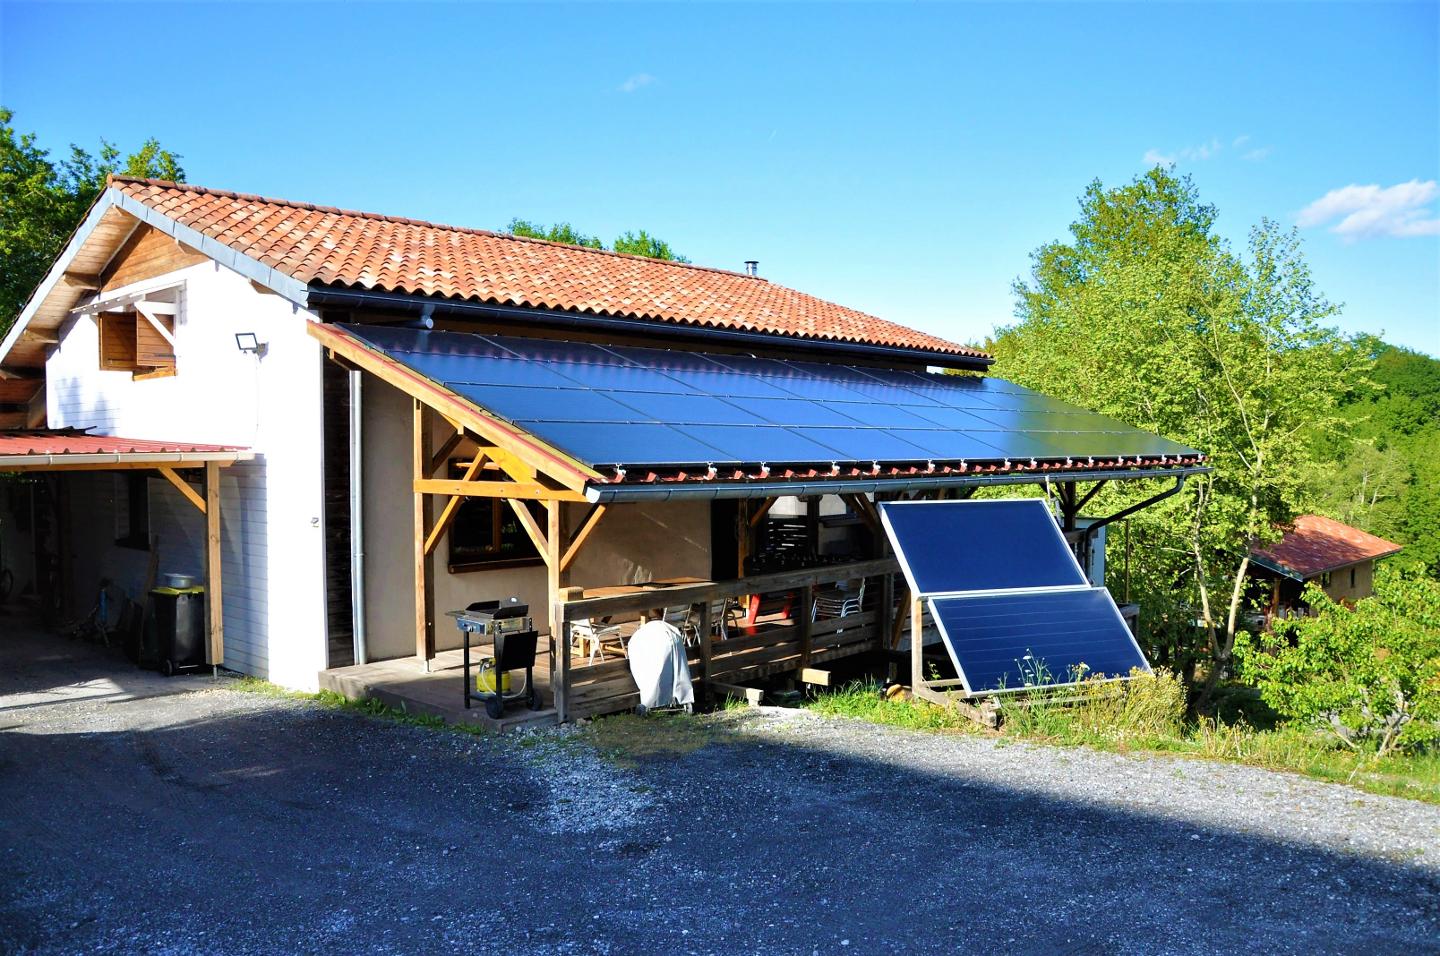 Hôte GreenGo: Cabanots - Ecolodges en Vallée d'Ossau